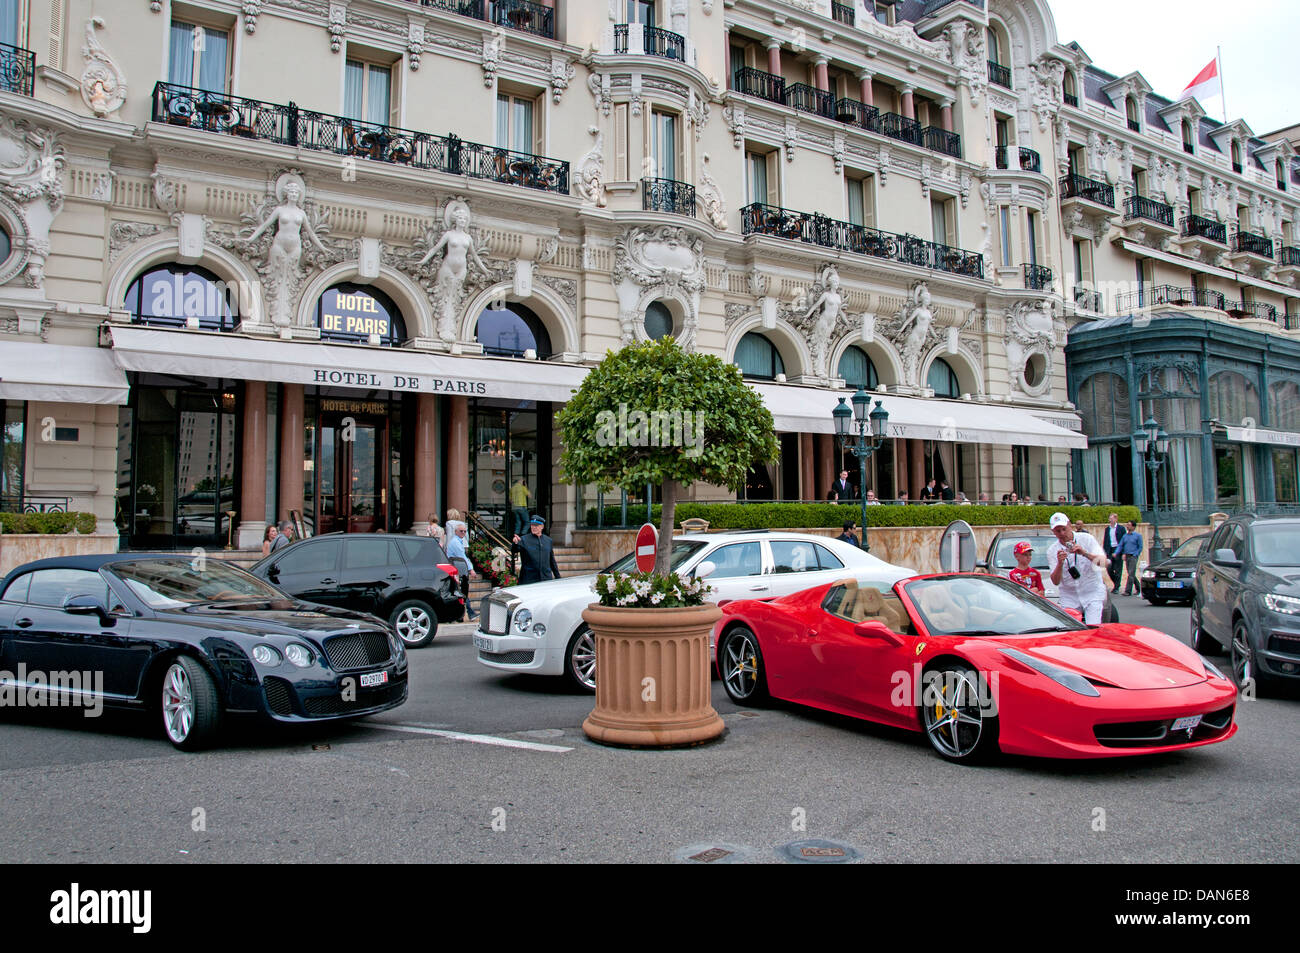 Hotel de Paris - Le Louis XV opposite of Grand Casino Monte Carlo  Principality of Monaco Luxury cars Bentlee Mercedes Ferrari Stock Photo -  Alamy